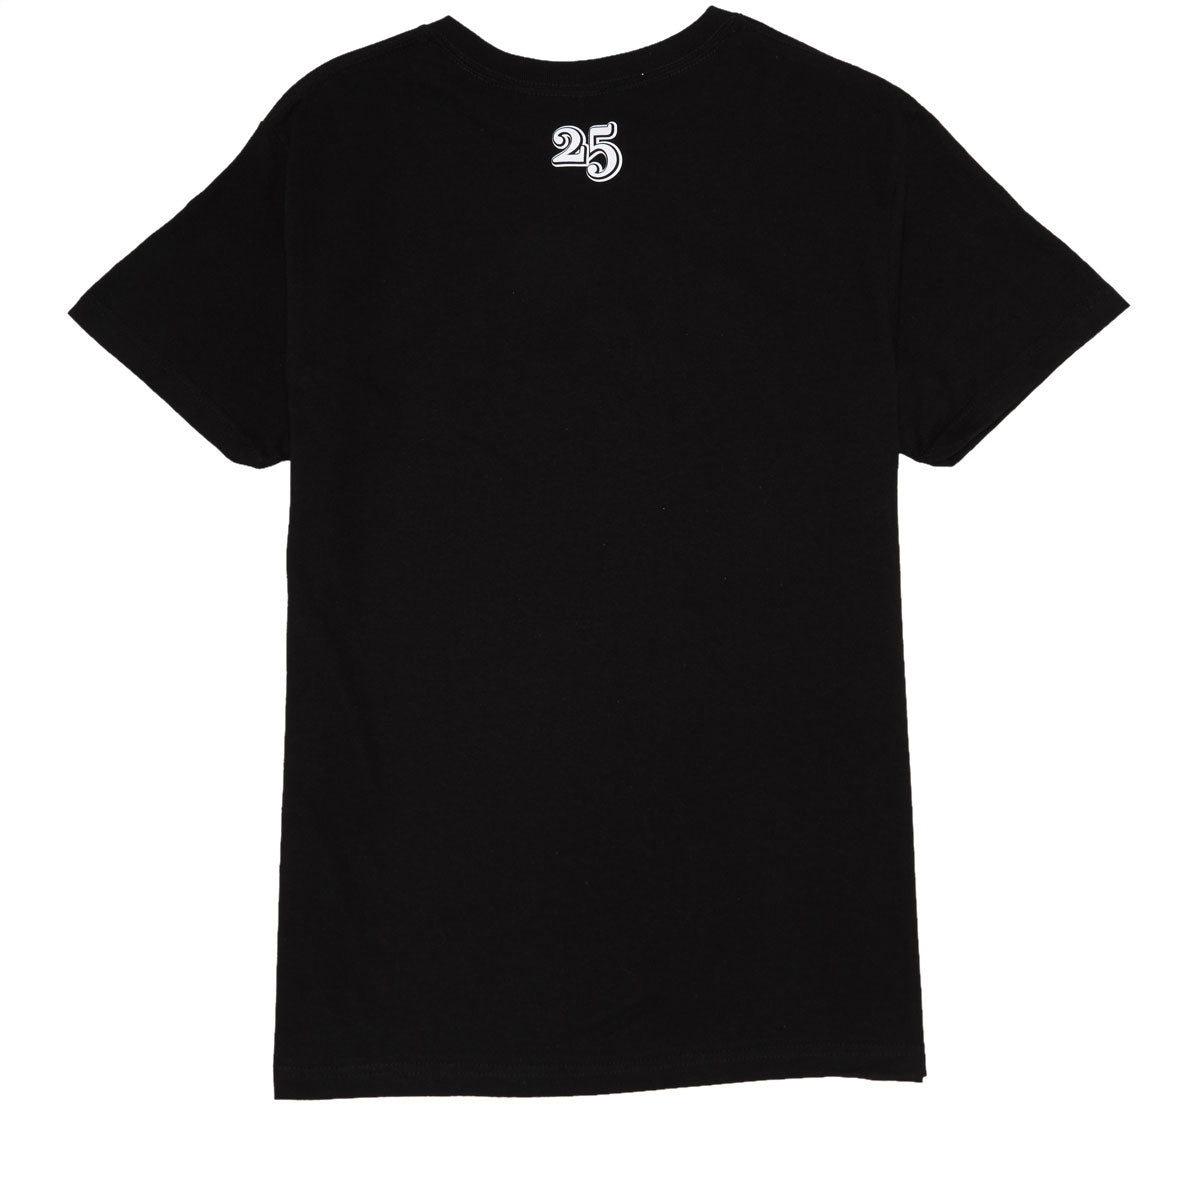 Shorty's Fulfill The Dream T-Shirt - Black image 2